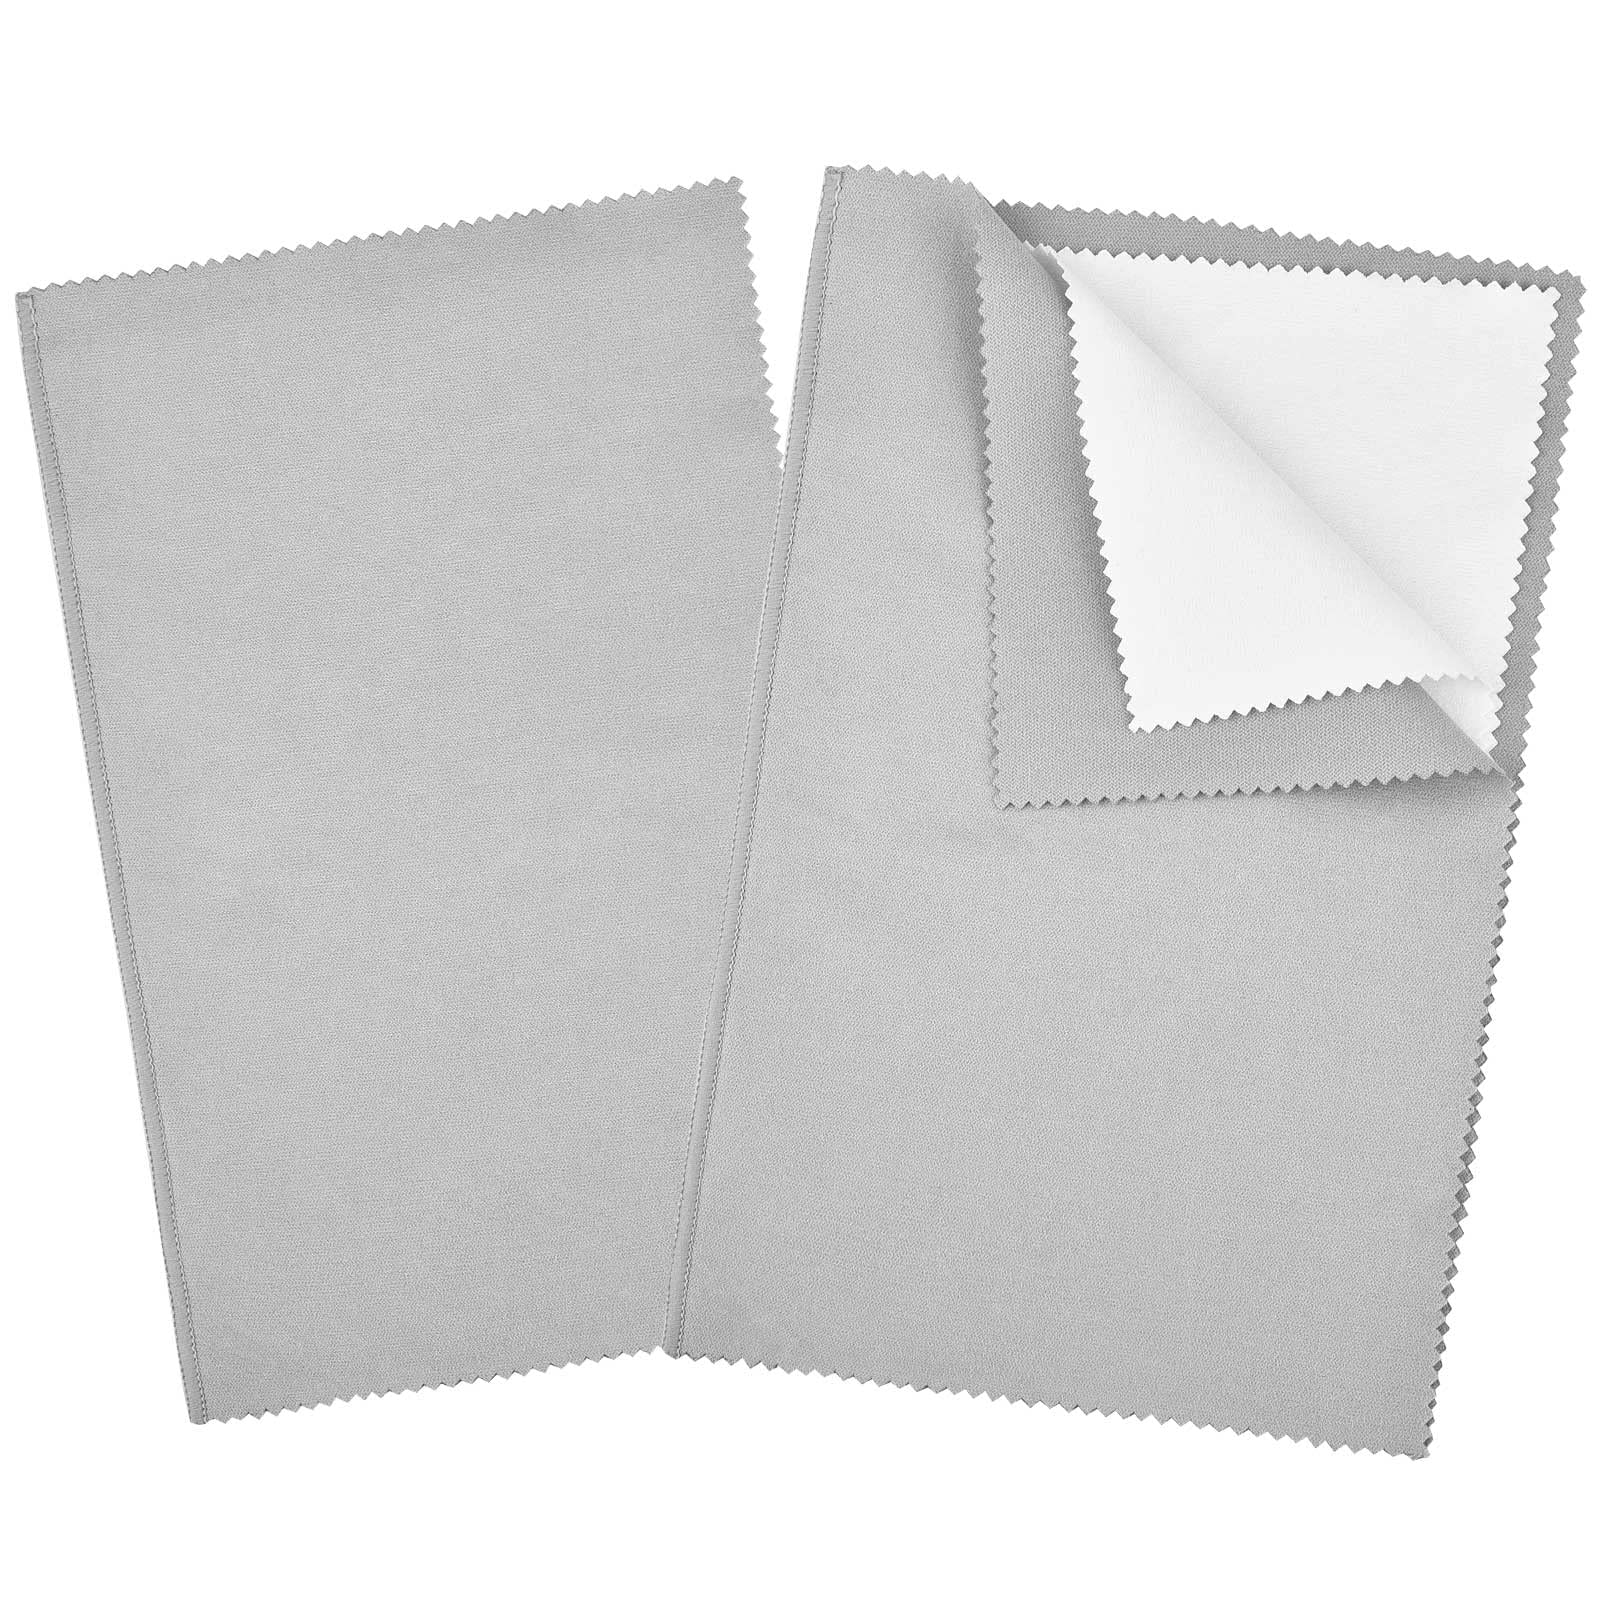 Anti-Tarnish Silver Cloth - Grey (Light Grey)